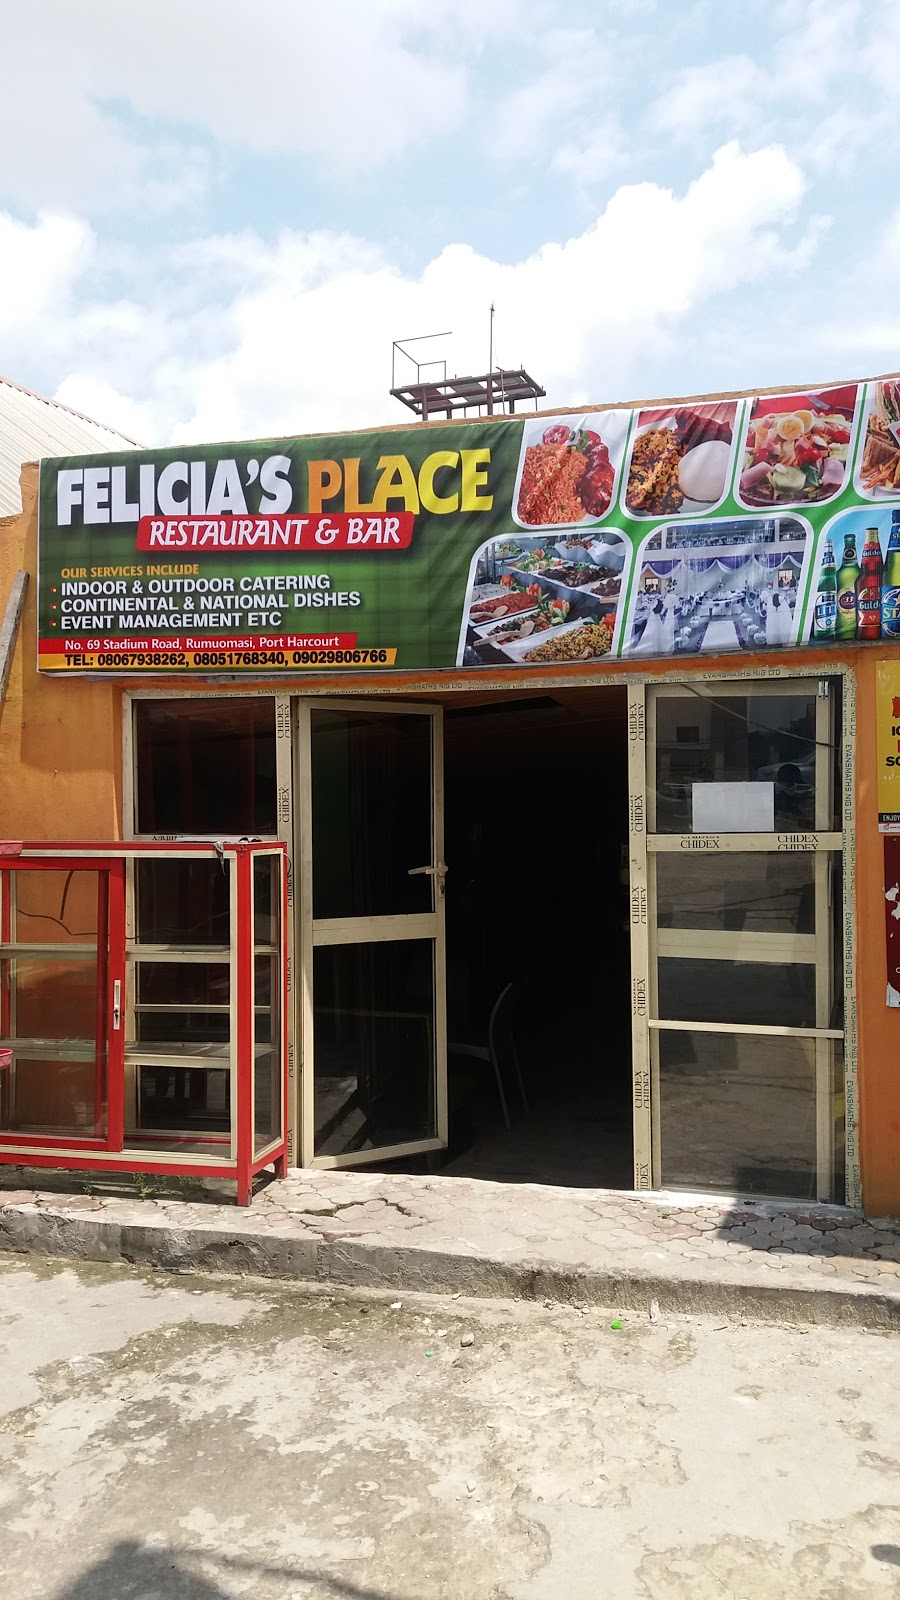 Felicias Place